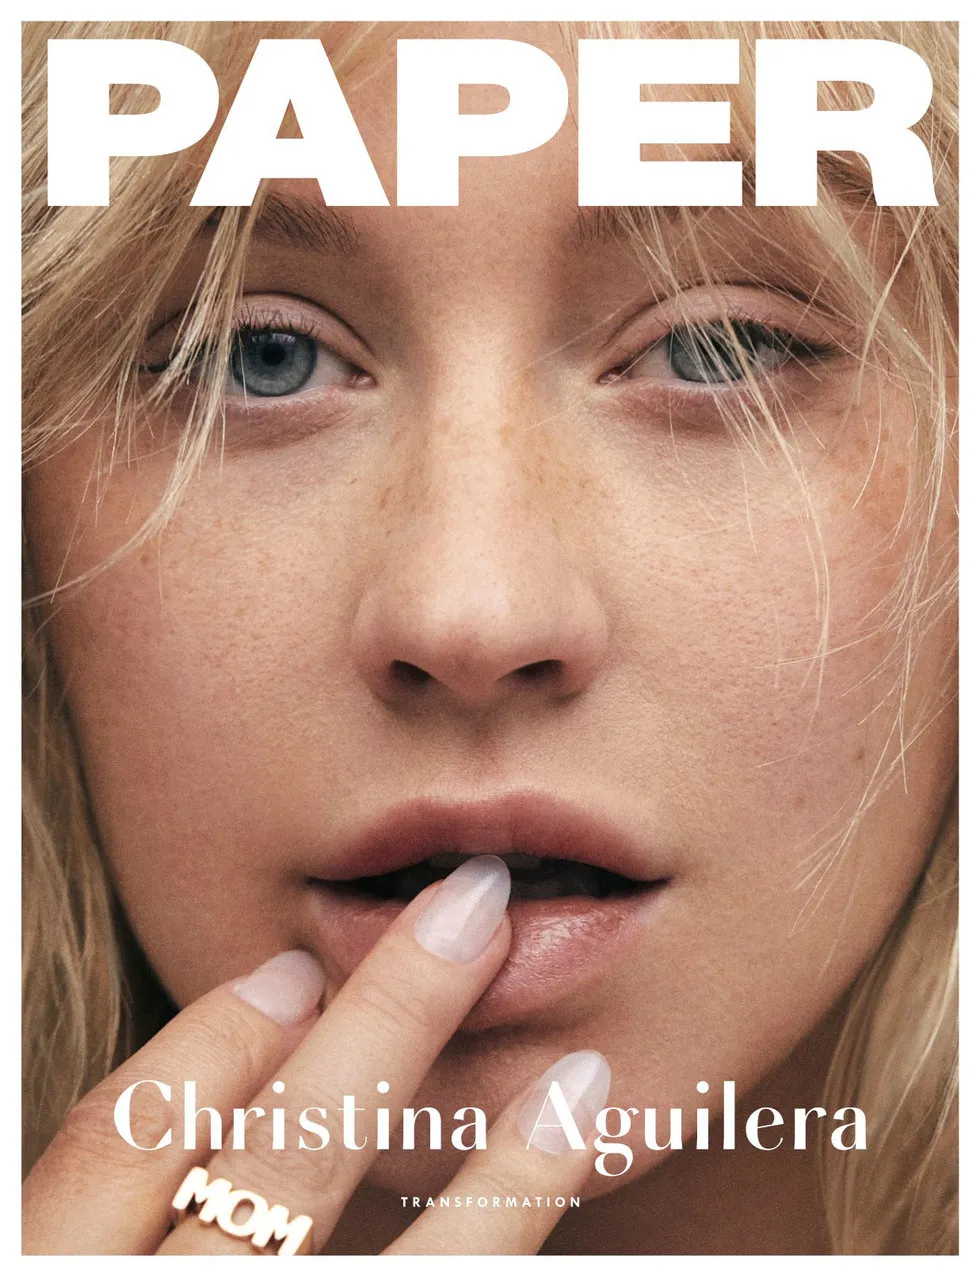 כריסטינה אגילרה על שער מגזין "פייפר", קיץ 2018